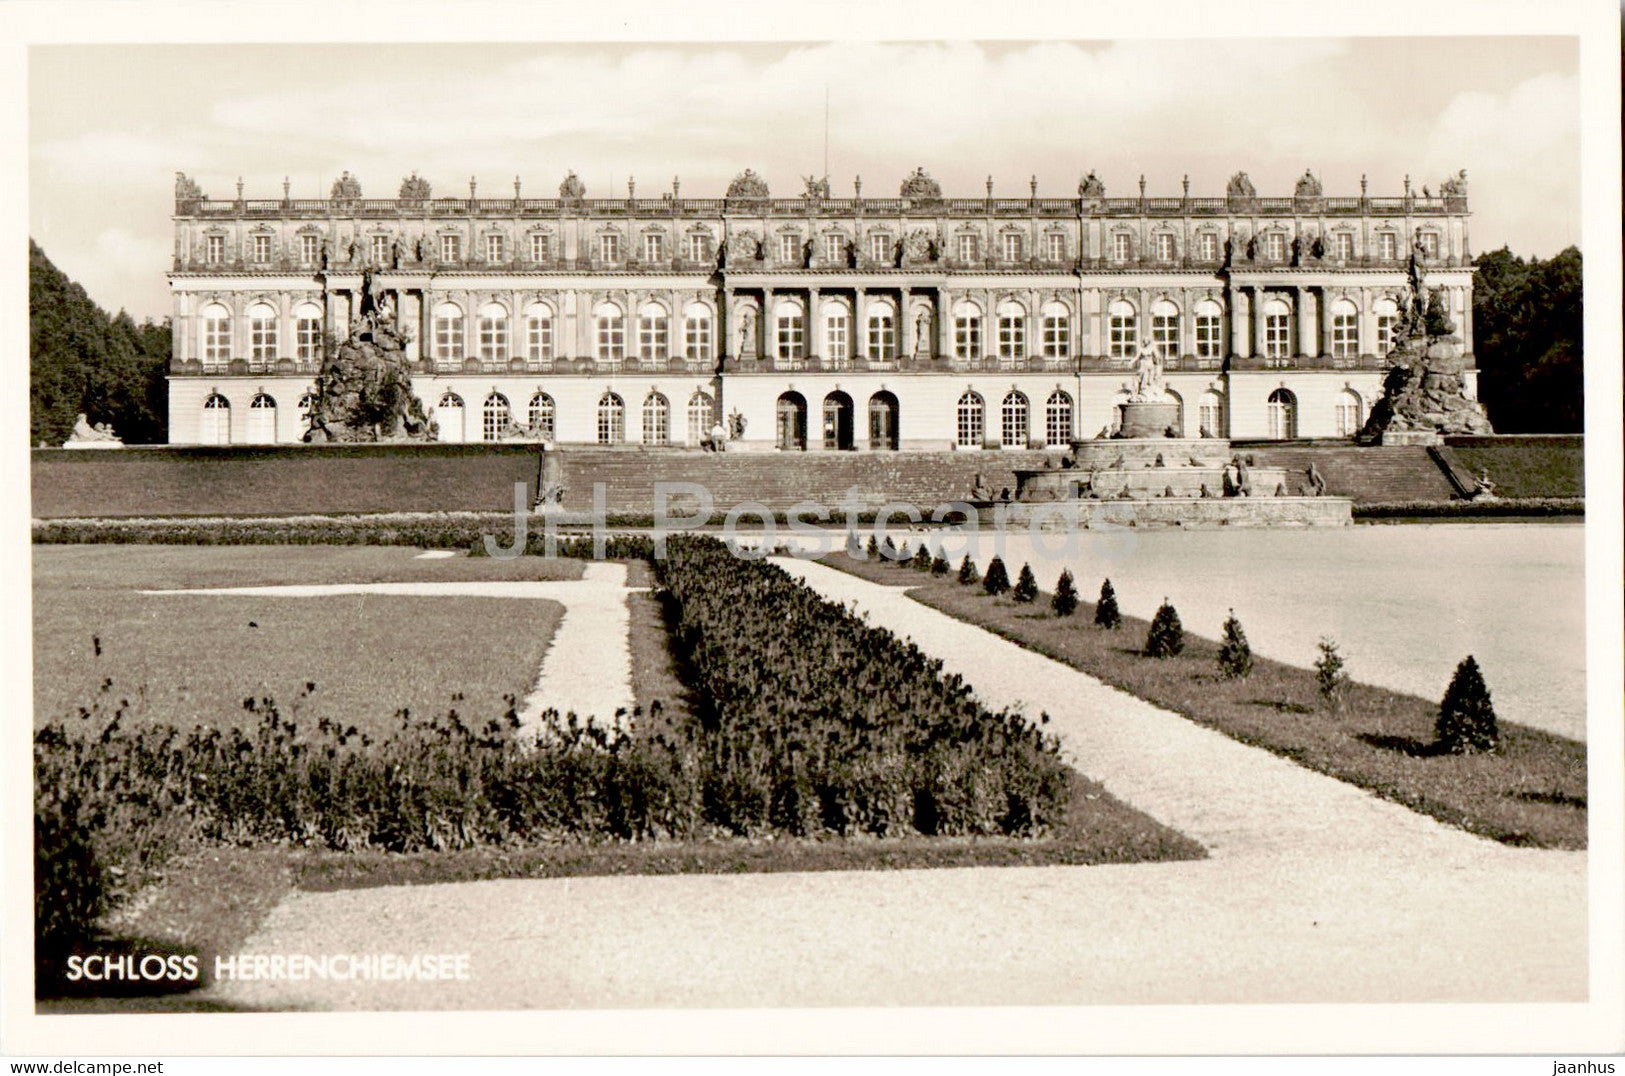 Schloss Herrenchiemsee - castle - old postcard - Germany - unused - JH Postcards